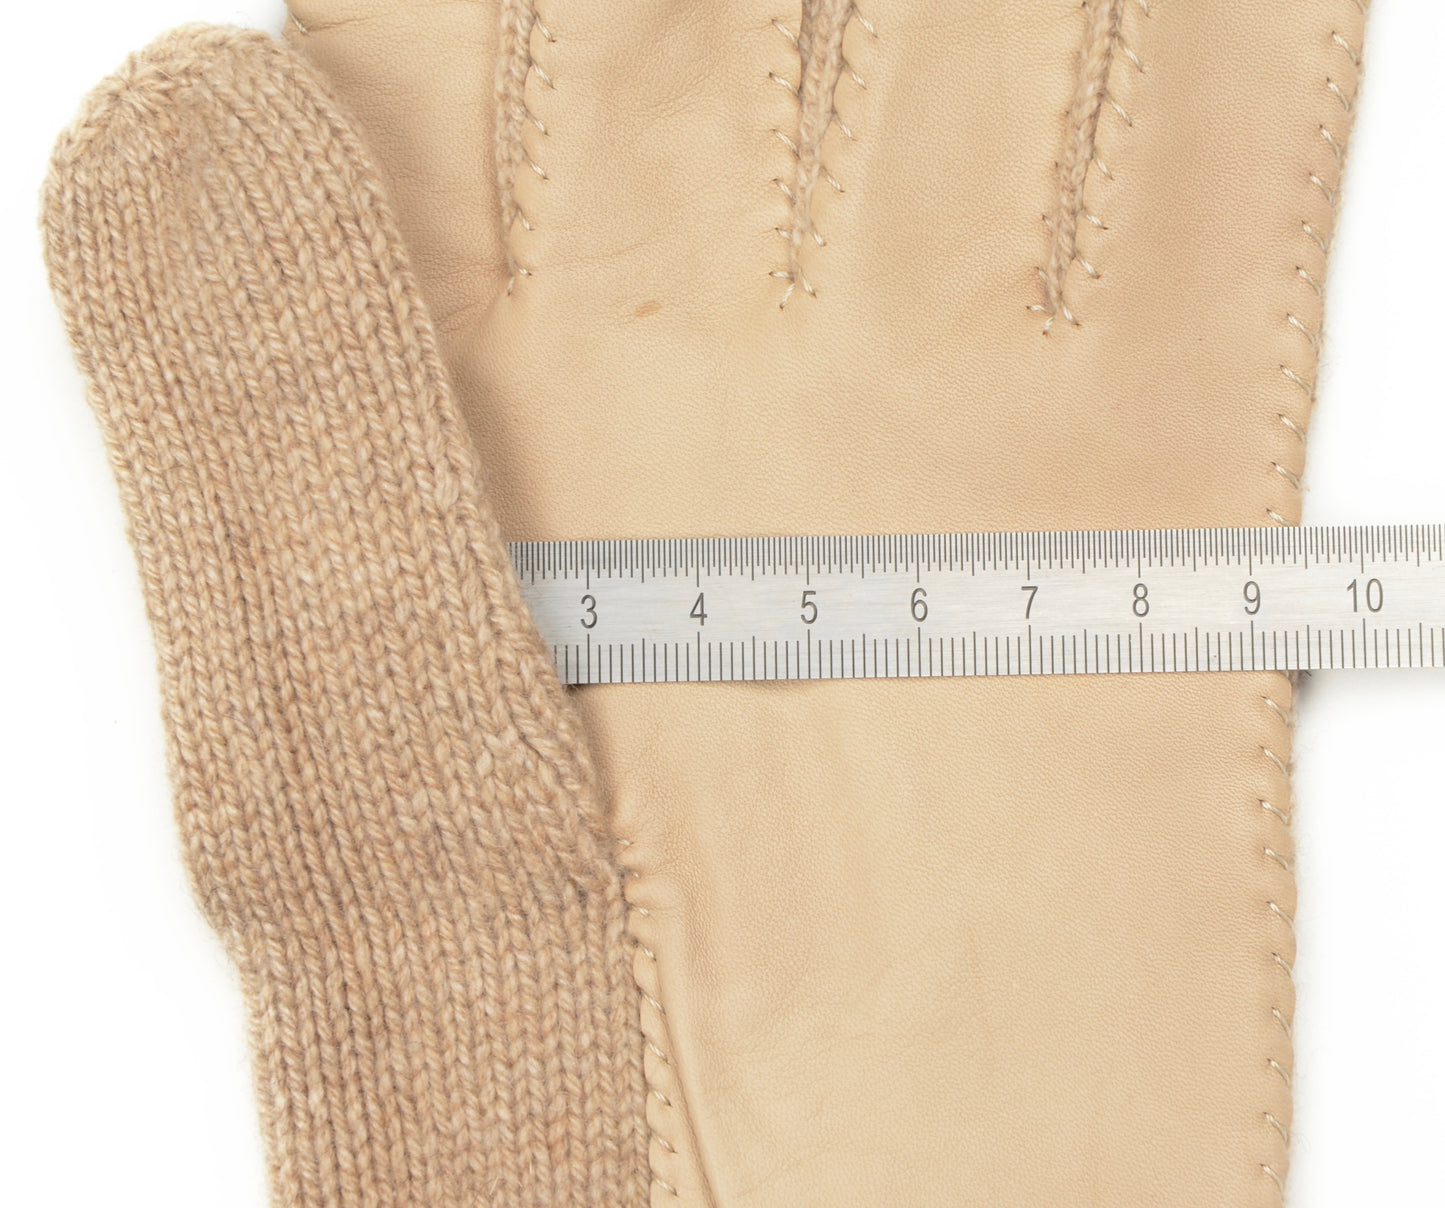 Cashmere Knit Gloves Size L - Oatmeal & Beige